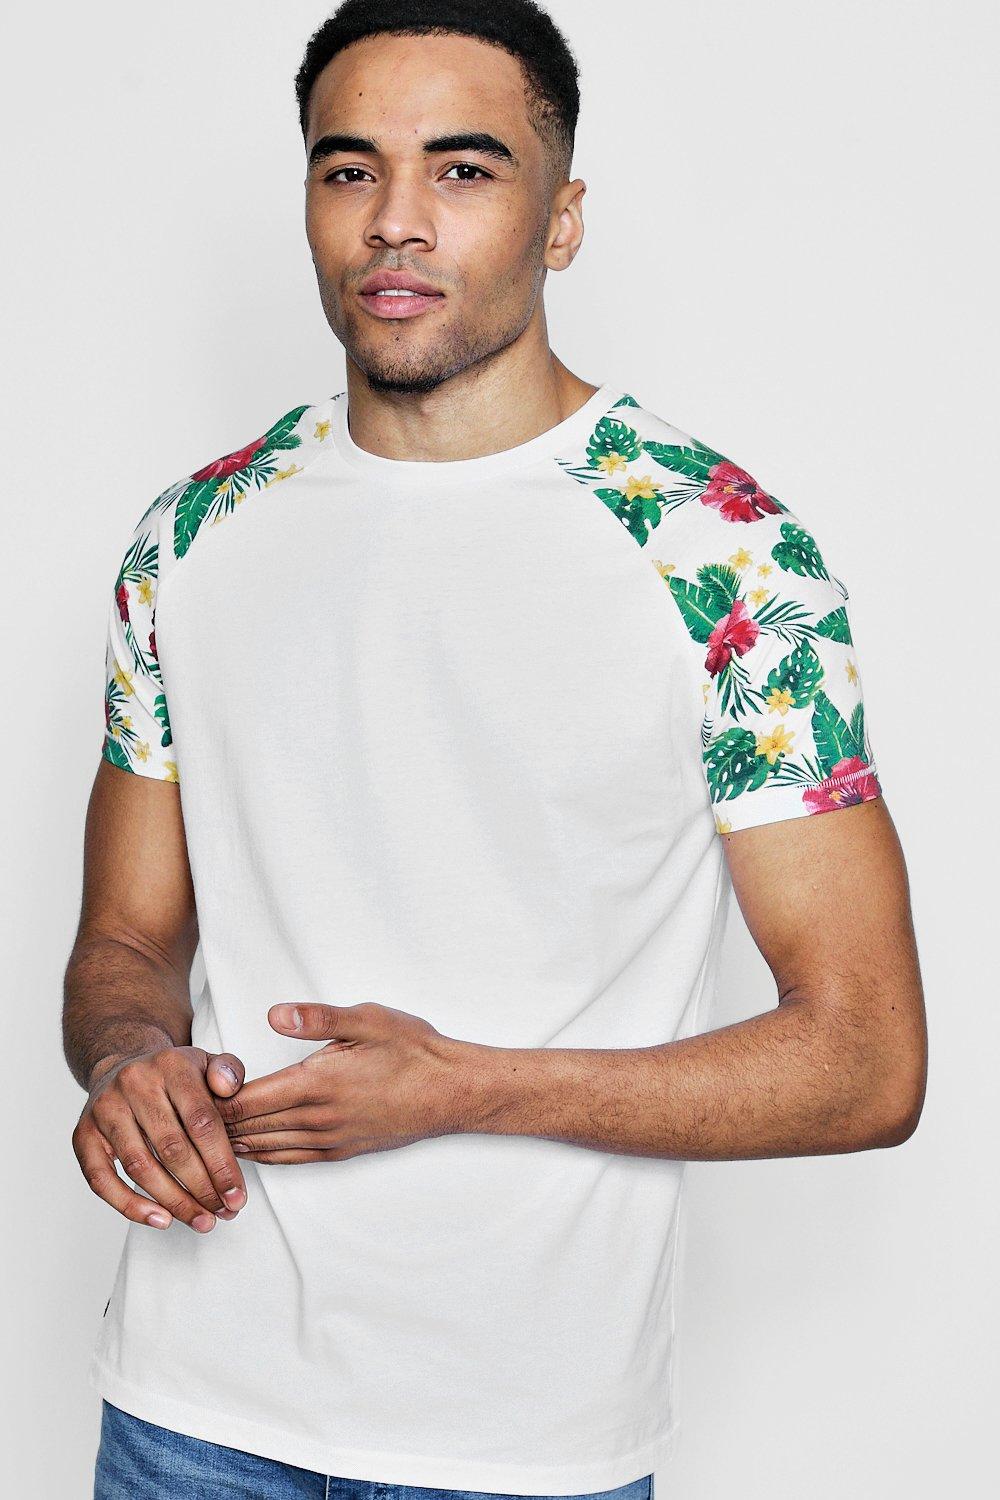 floral raglan shirt